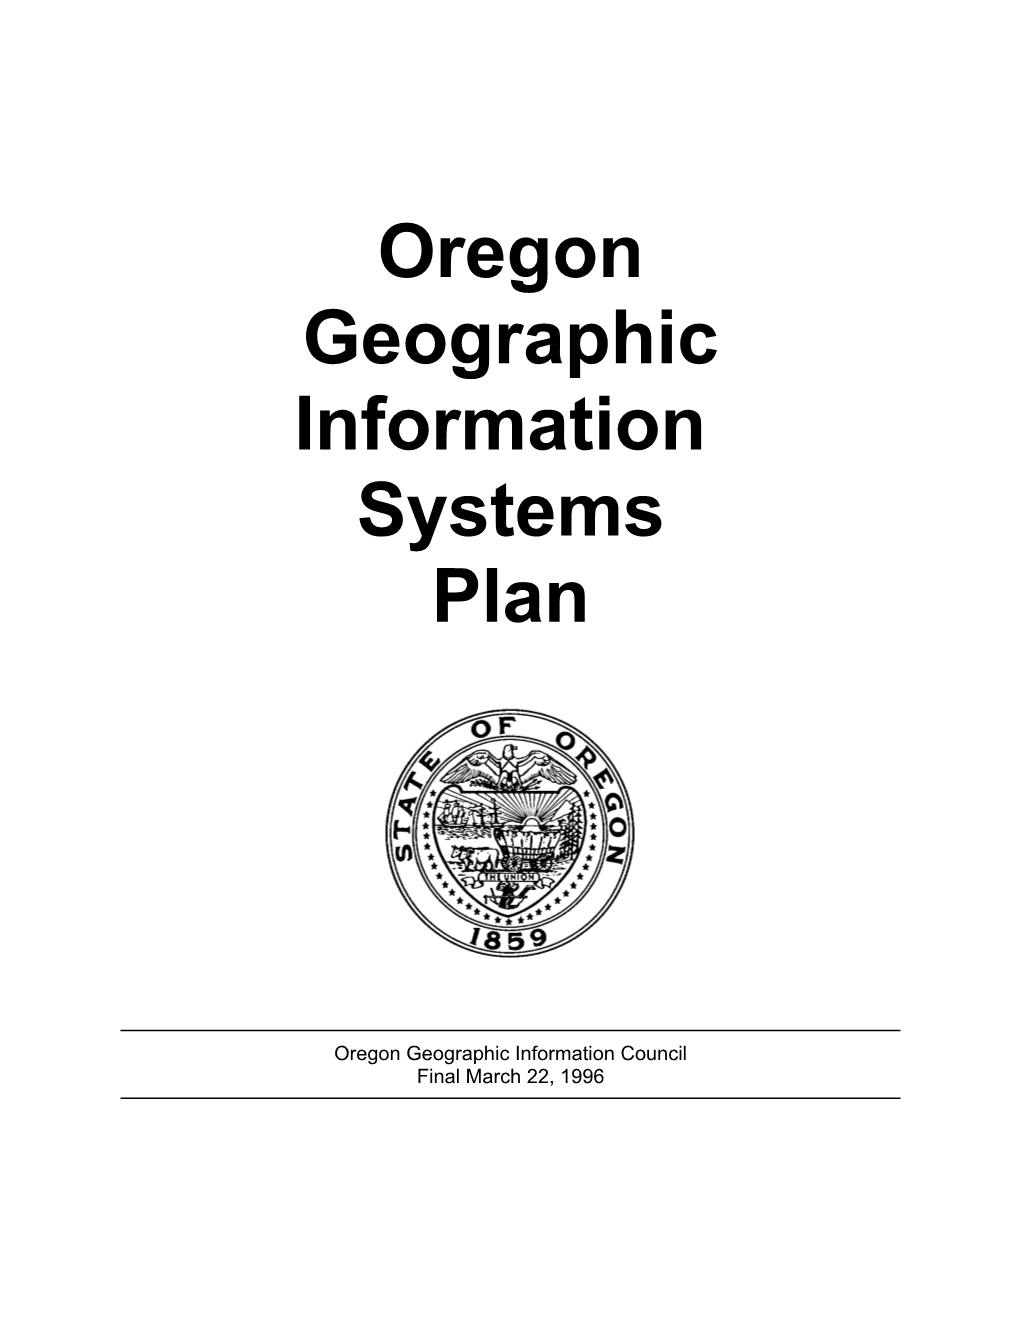 Oregon Geographic Information System Plan